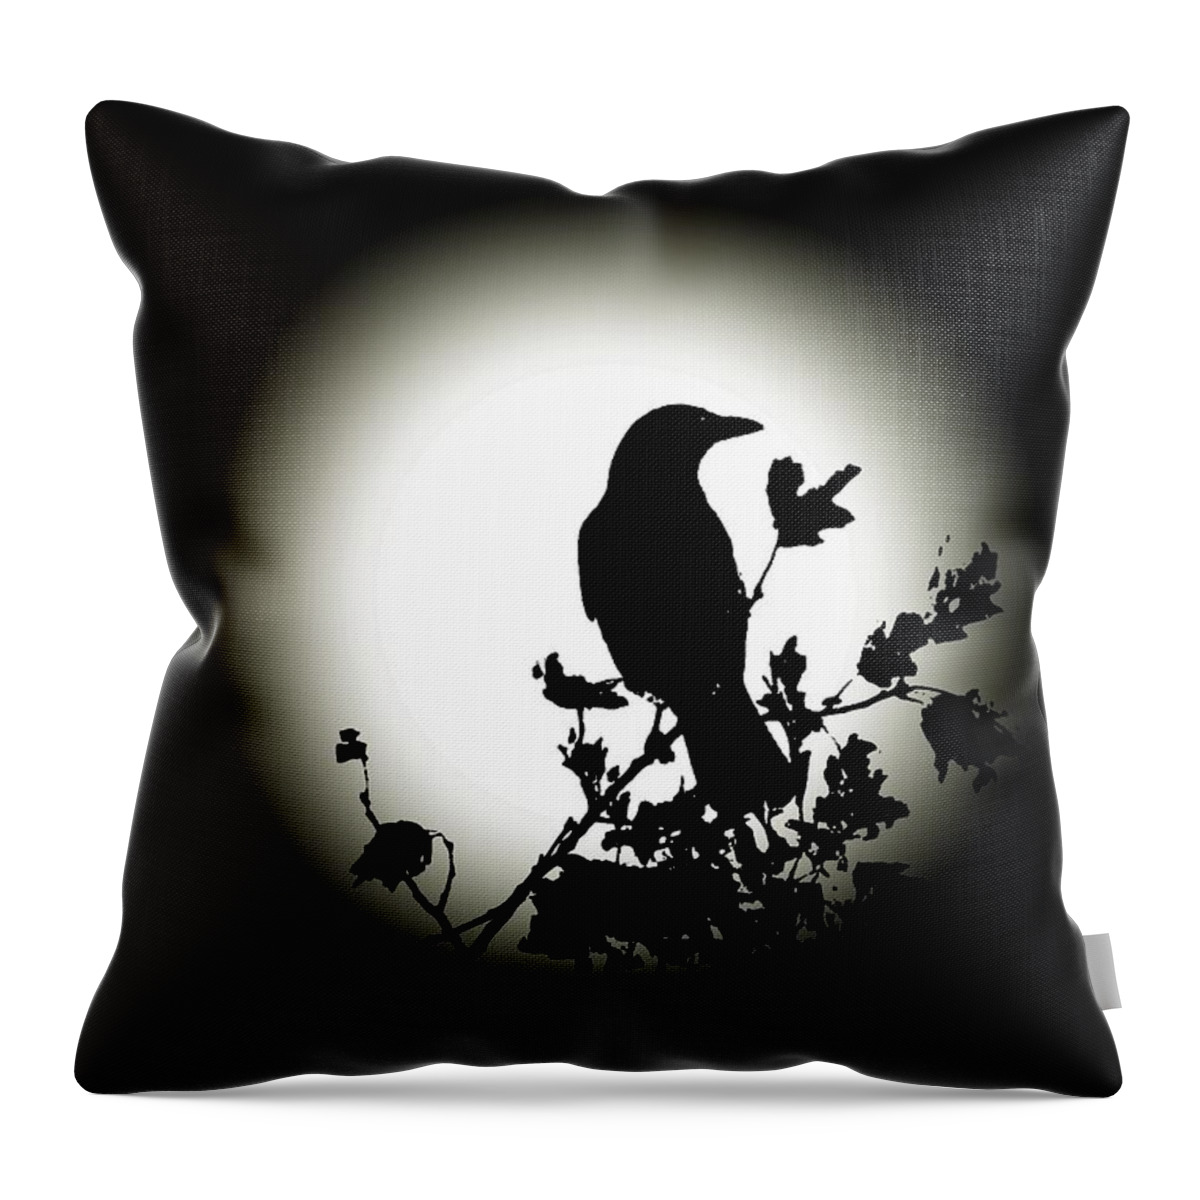 Blackbird Throw Pillow featuring the photograph Blackbird in Silhouette by David Dehner